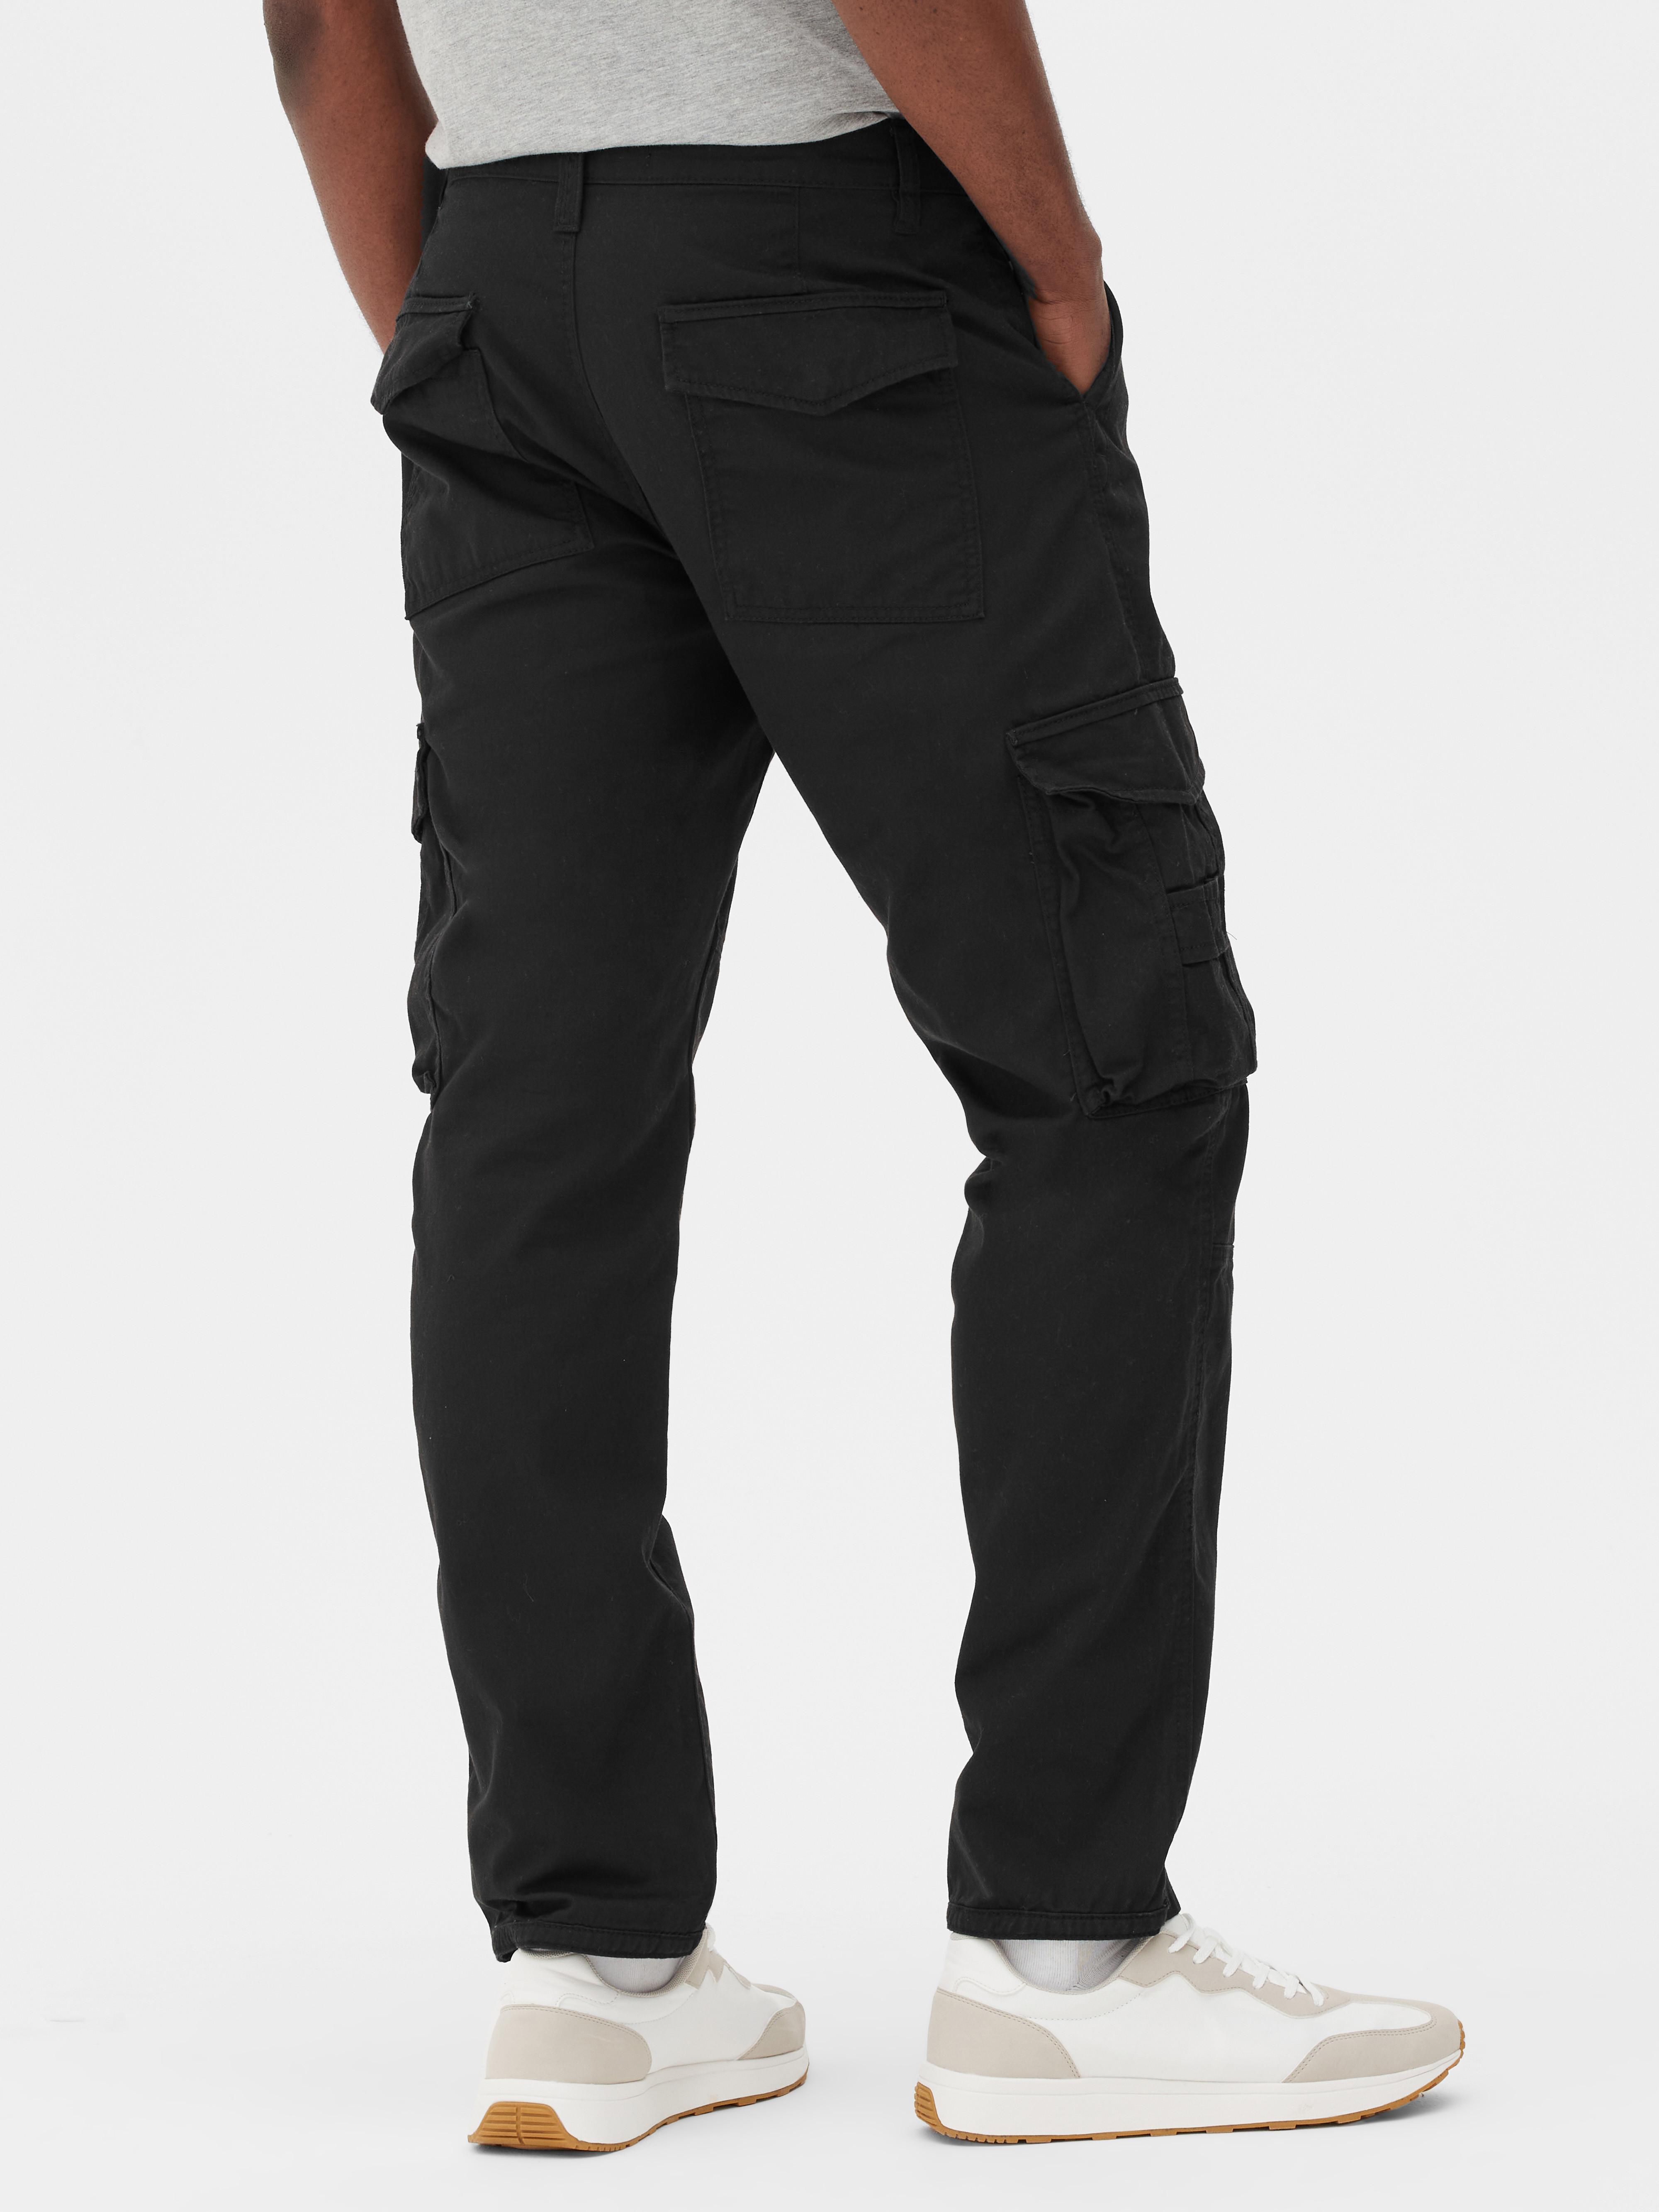 Primark Womens Black Cargo Trousers Size 8 L27 in – Preworn Ltd